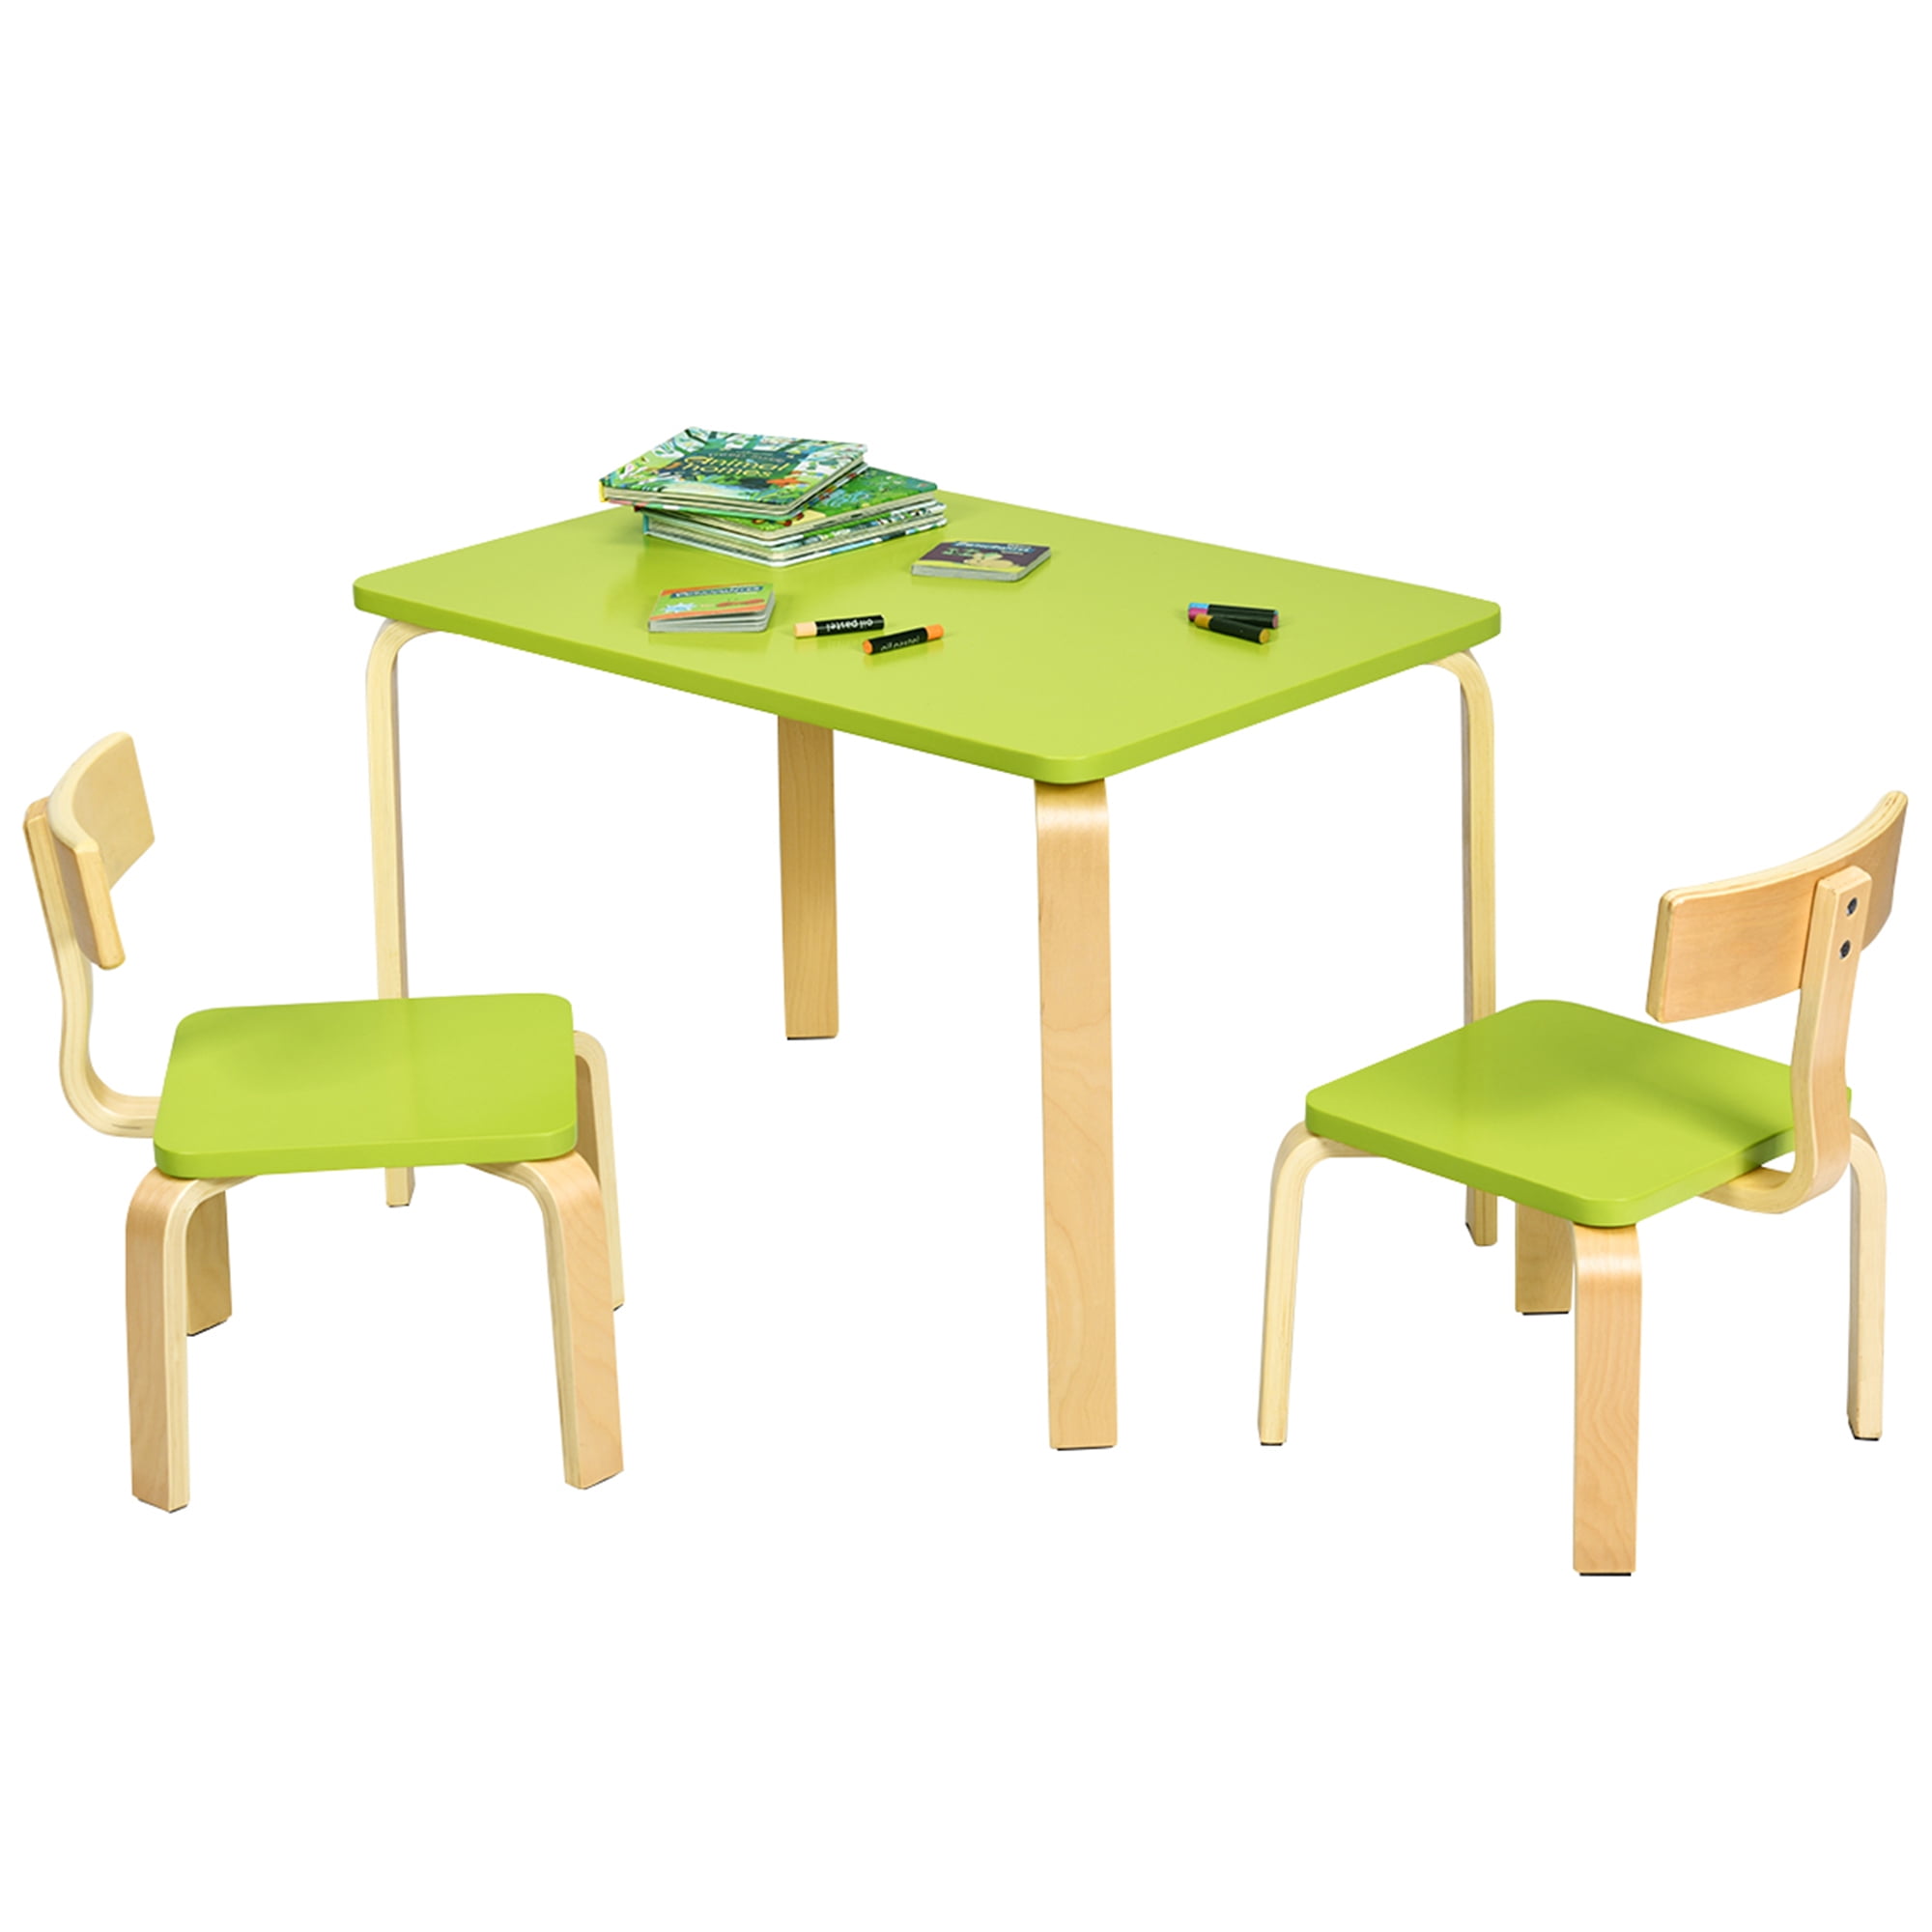 children's activity desk and chair set